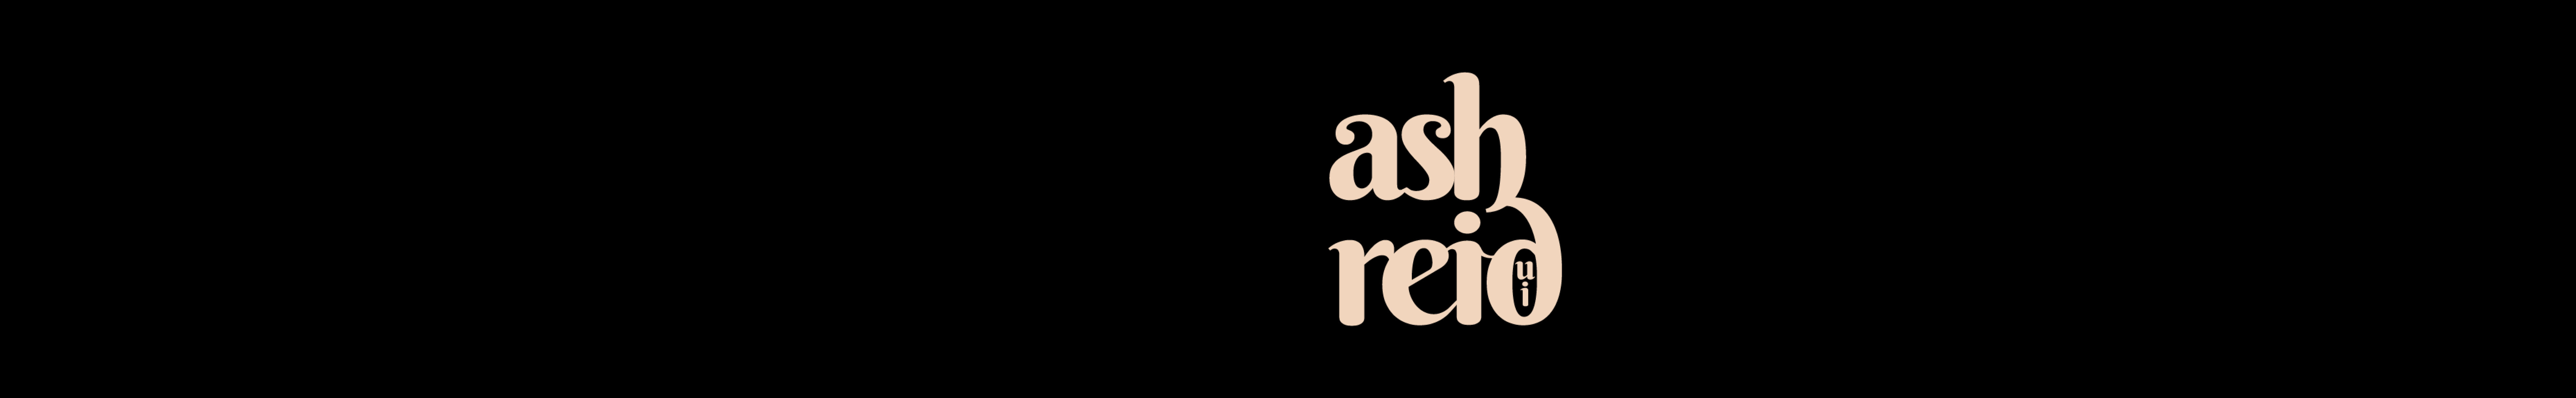 Ashley Reid's profile banner